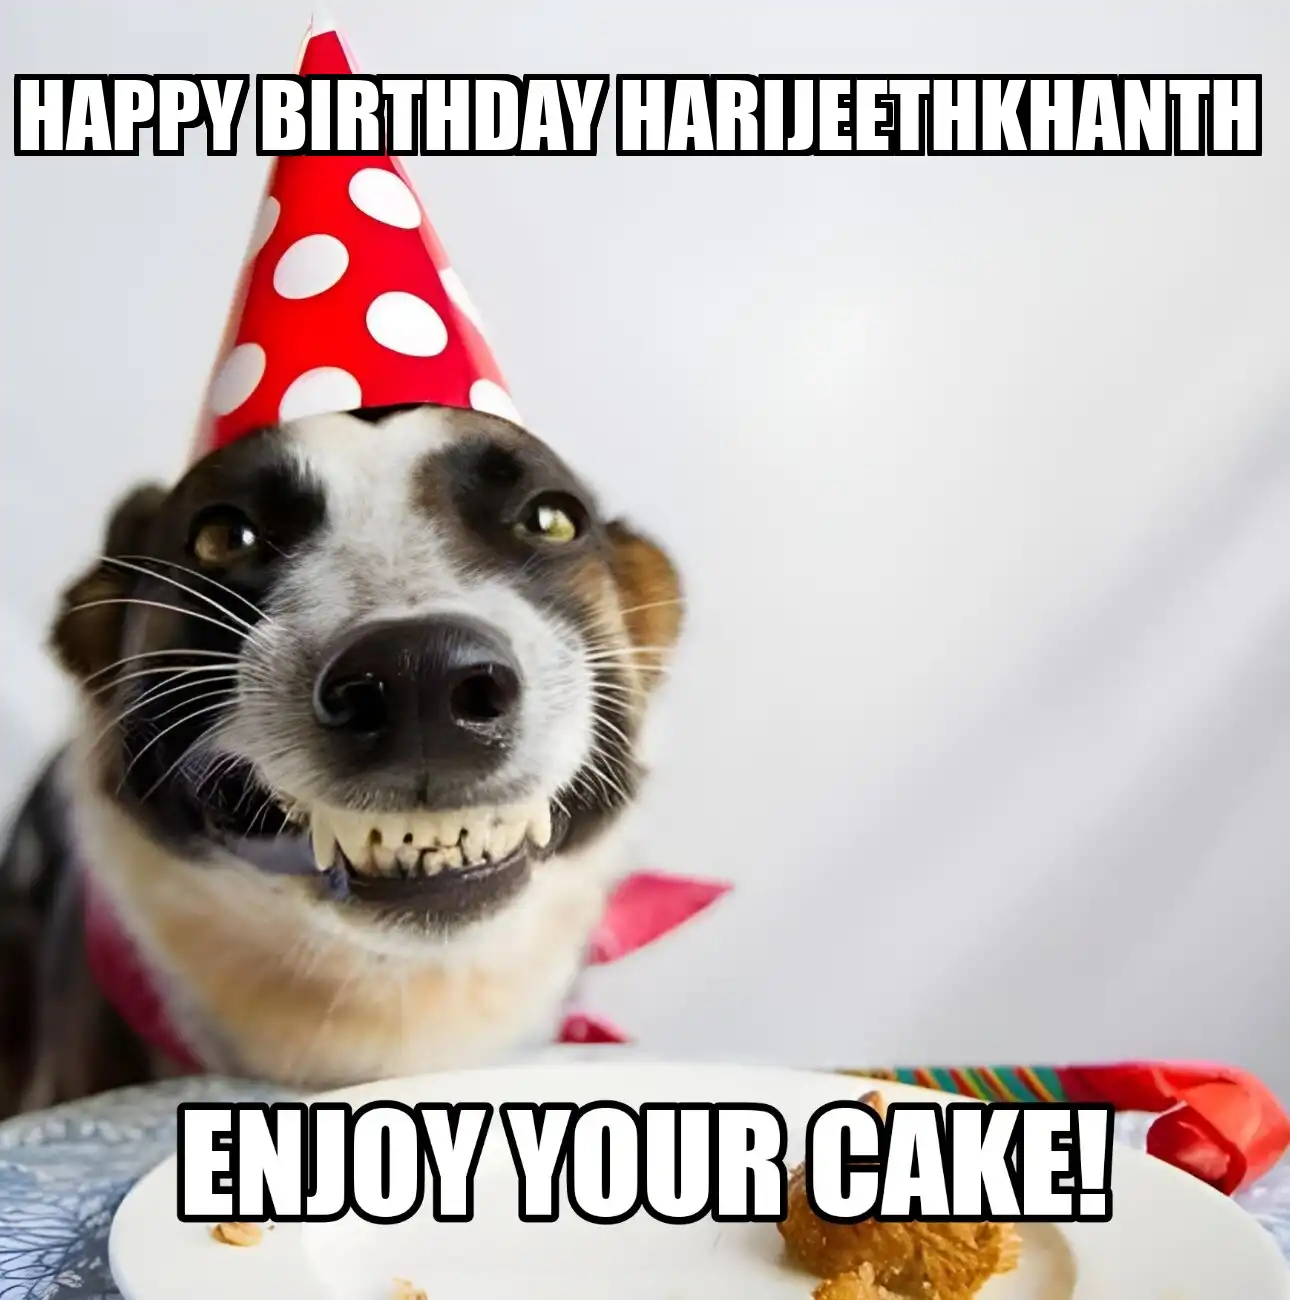 Happy Birthday Harijeethkhanth Enjoy Your Cake Dog Meme